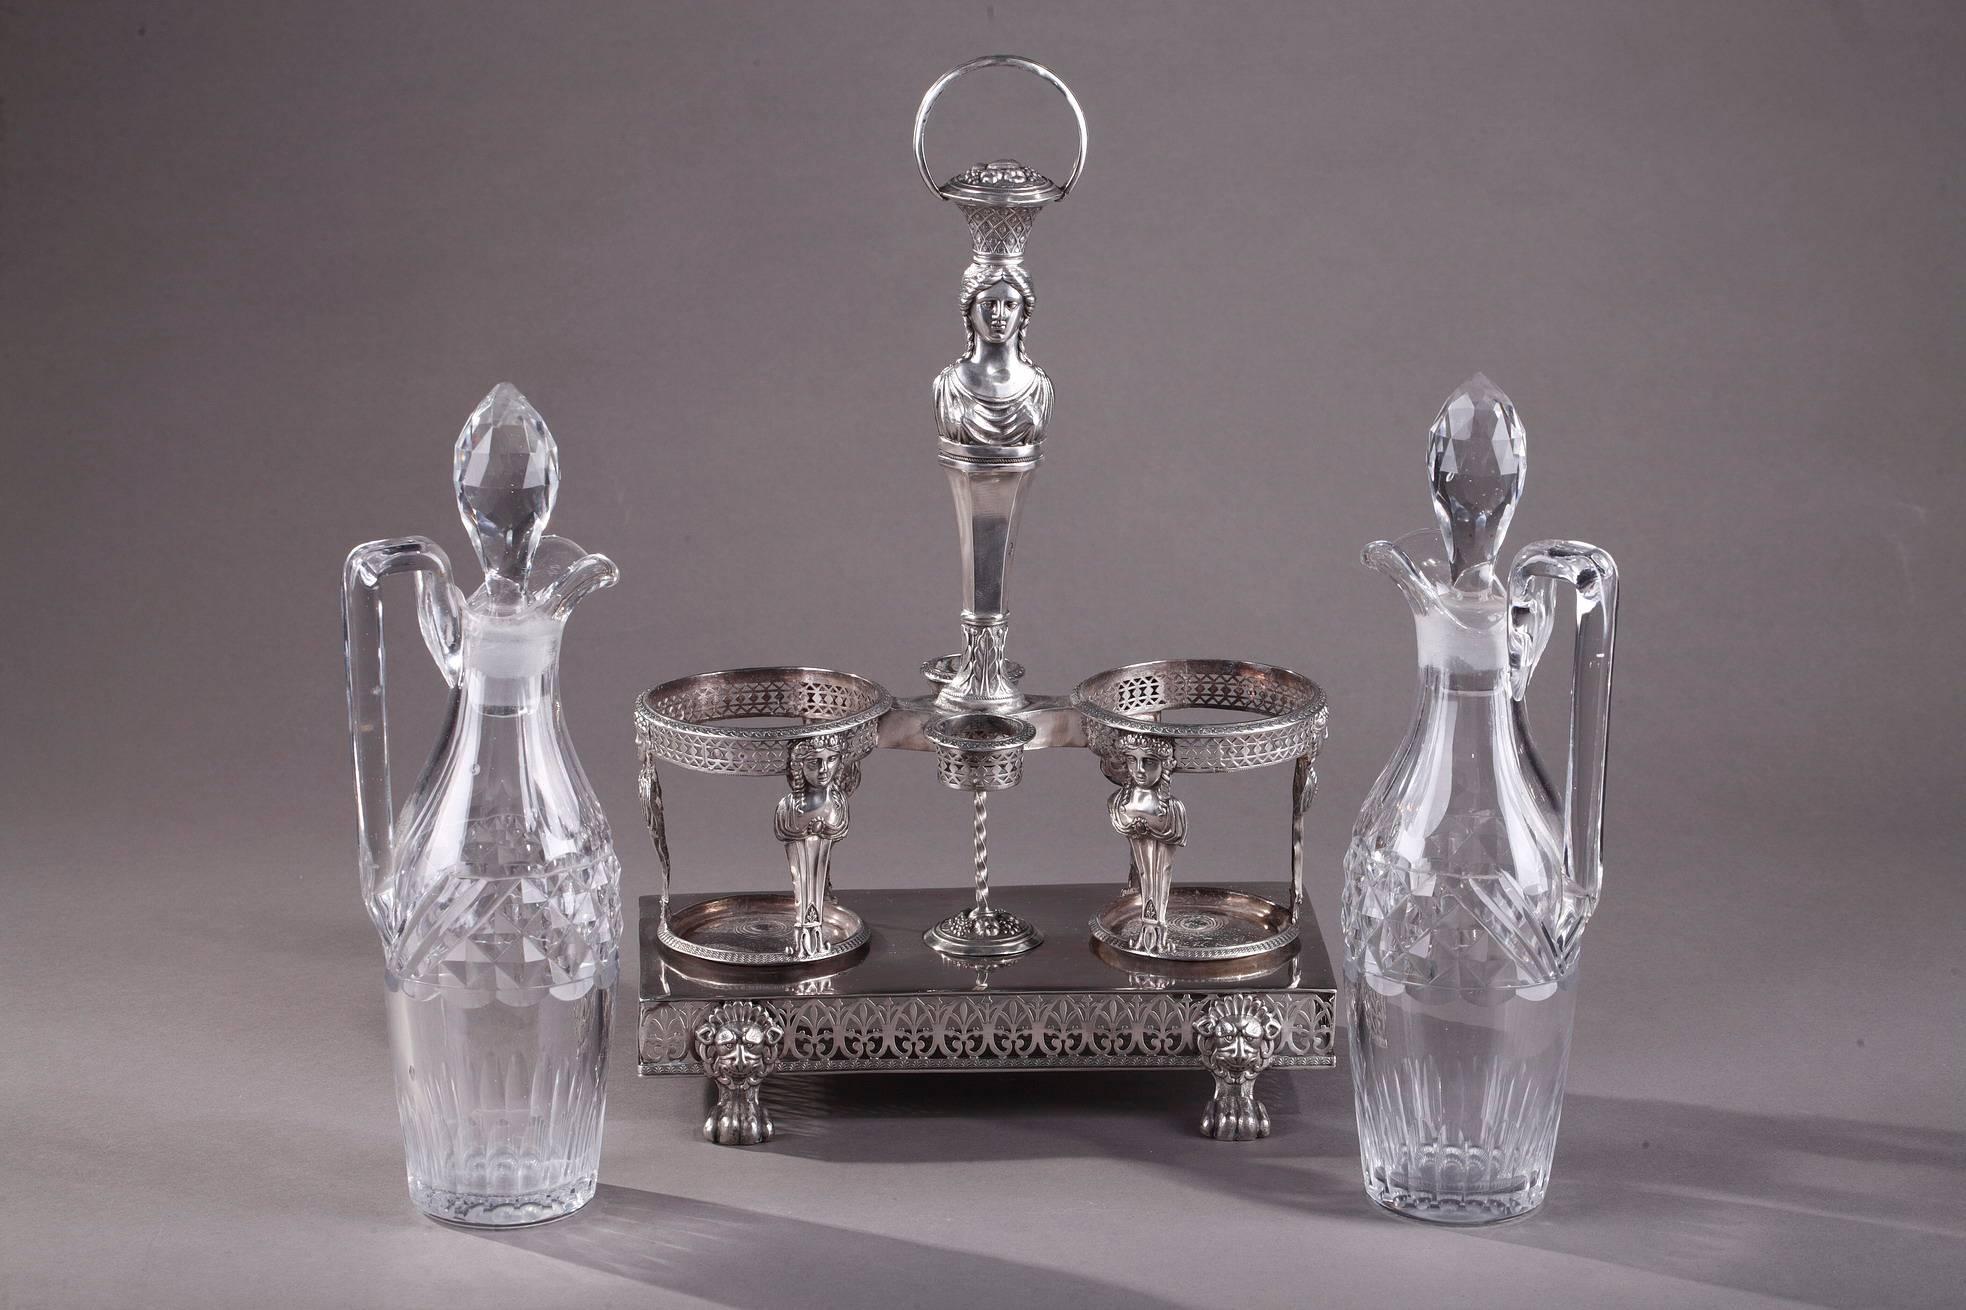 Directoire Antique Silver Cruet Set, Oil and Vinegar Bottles, 18th Century Period